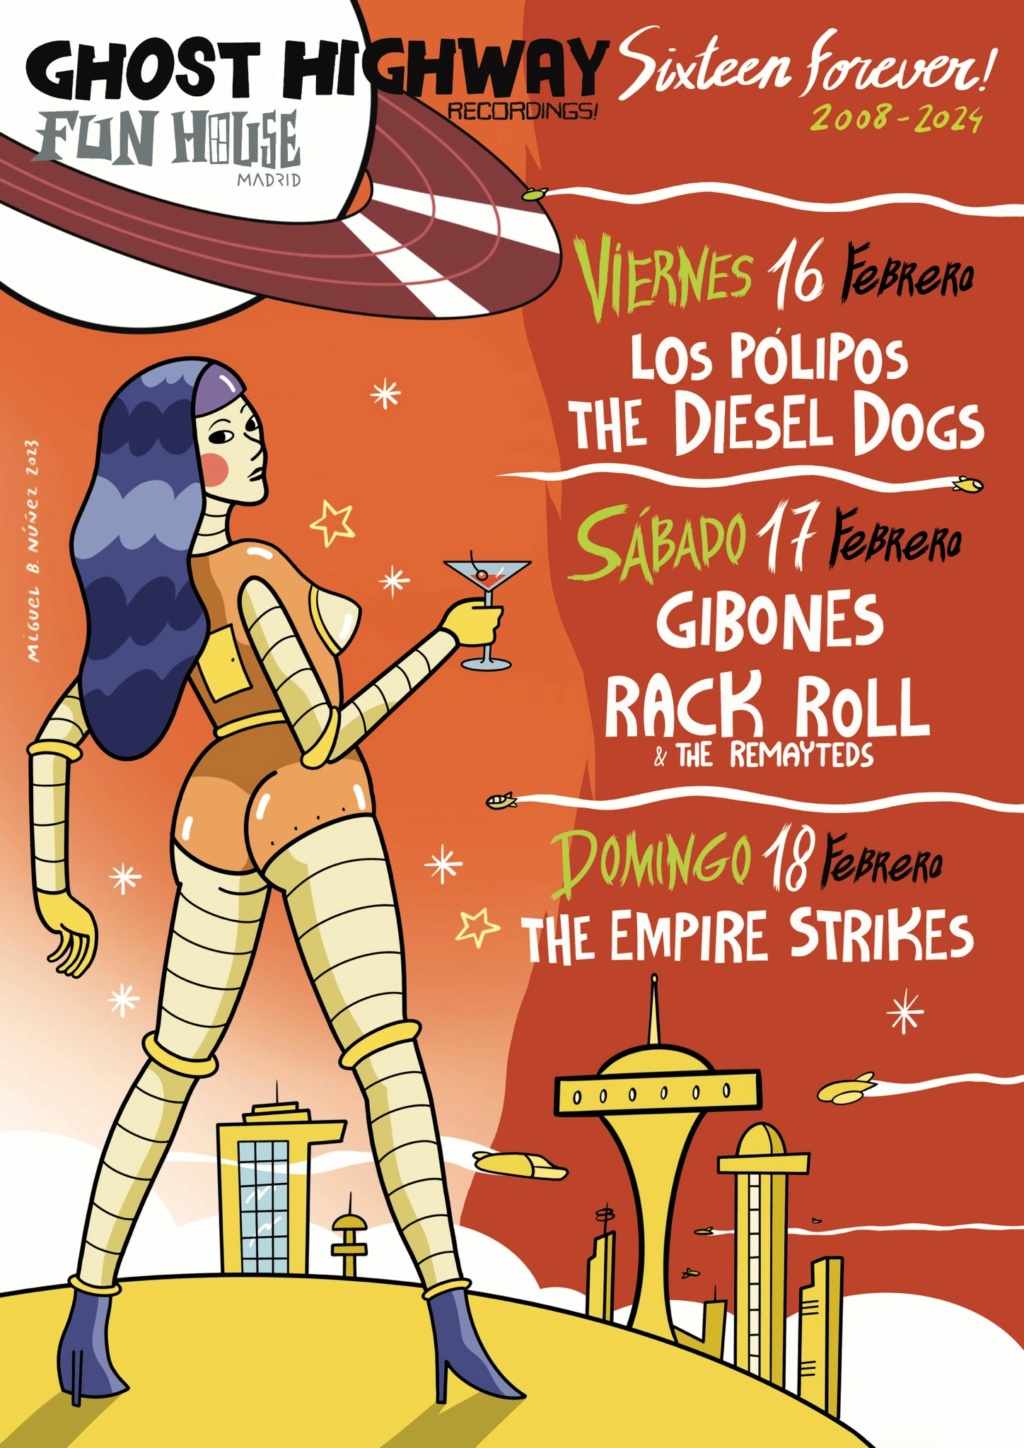 The Diesel Dogs - Nuevo Disco - Dom 28 Abril Acústico (Madrid) - Página 3 Whatsa14